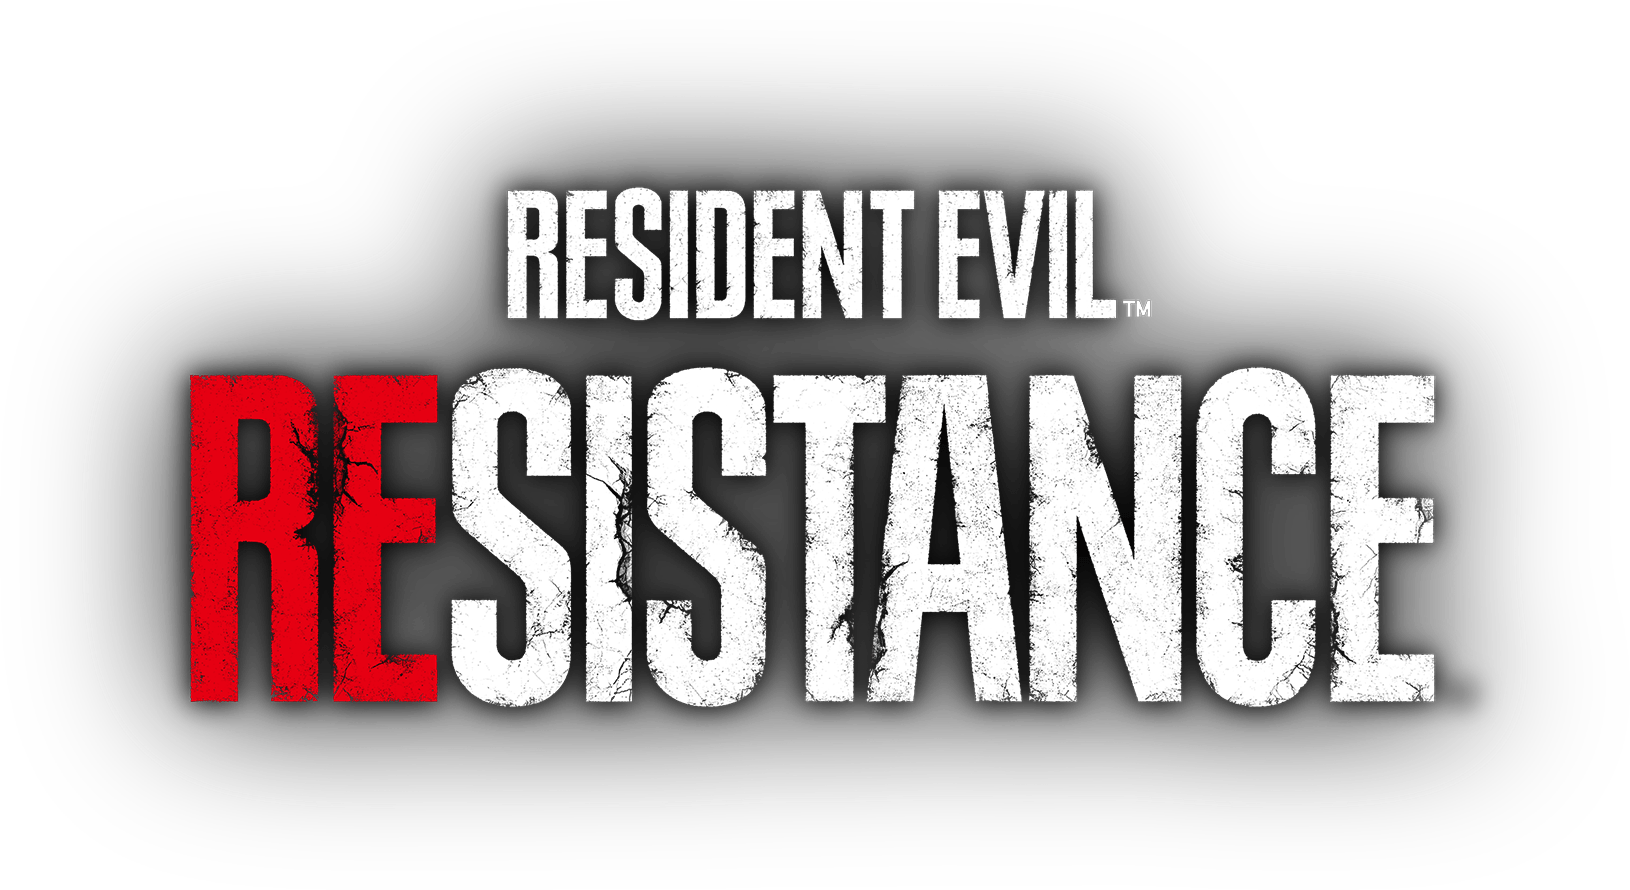 Resident Evil: Resistance - Wikipedia